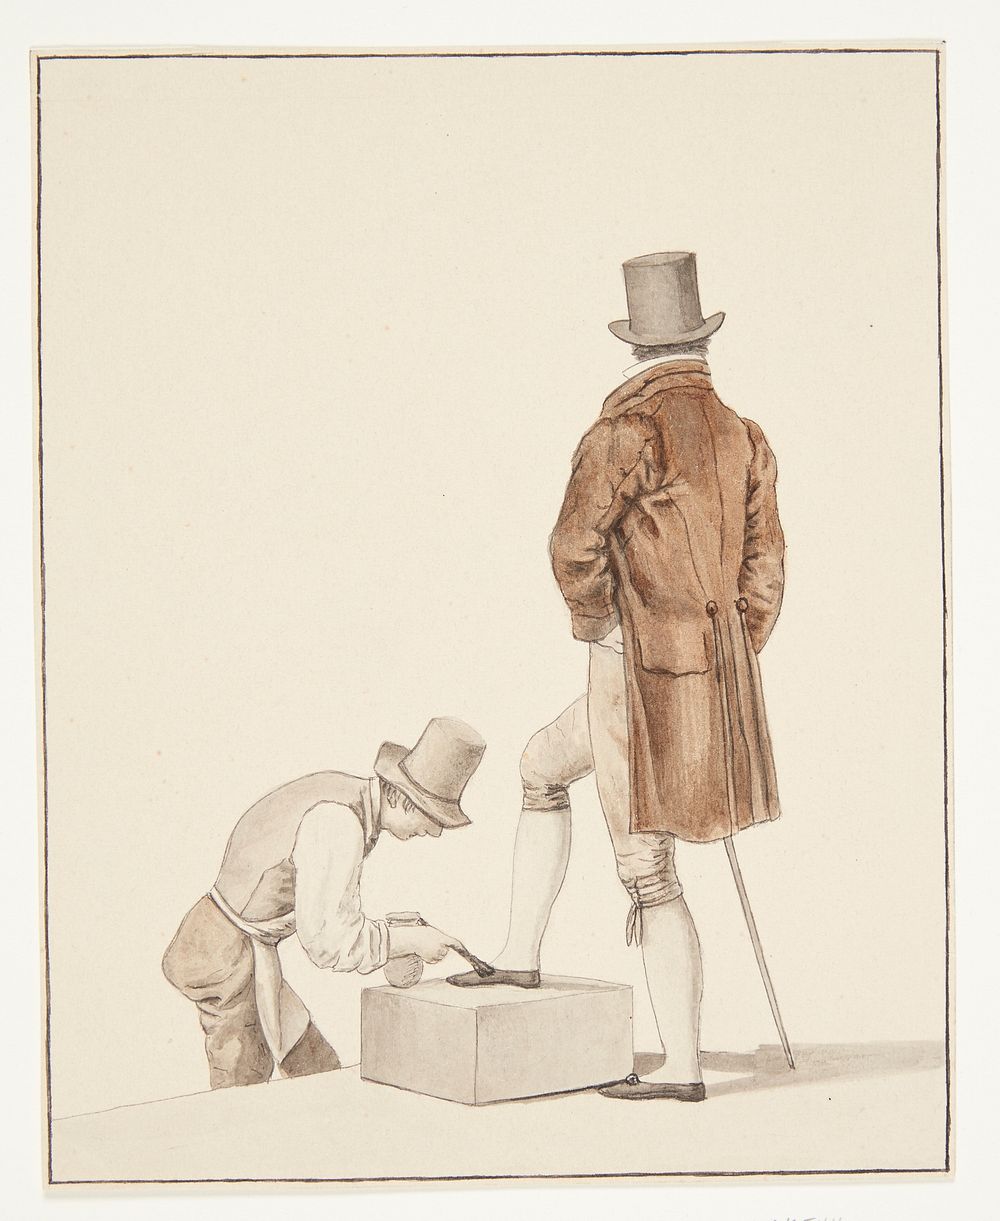 A shoeshine from Paris by C.W. Eckersberg